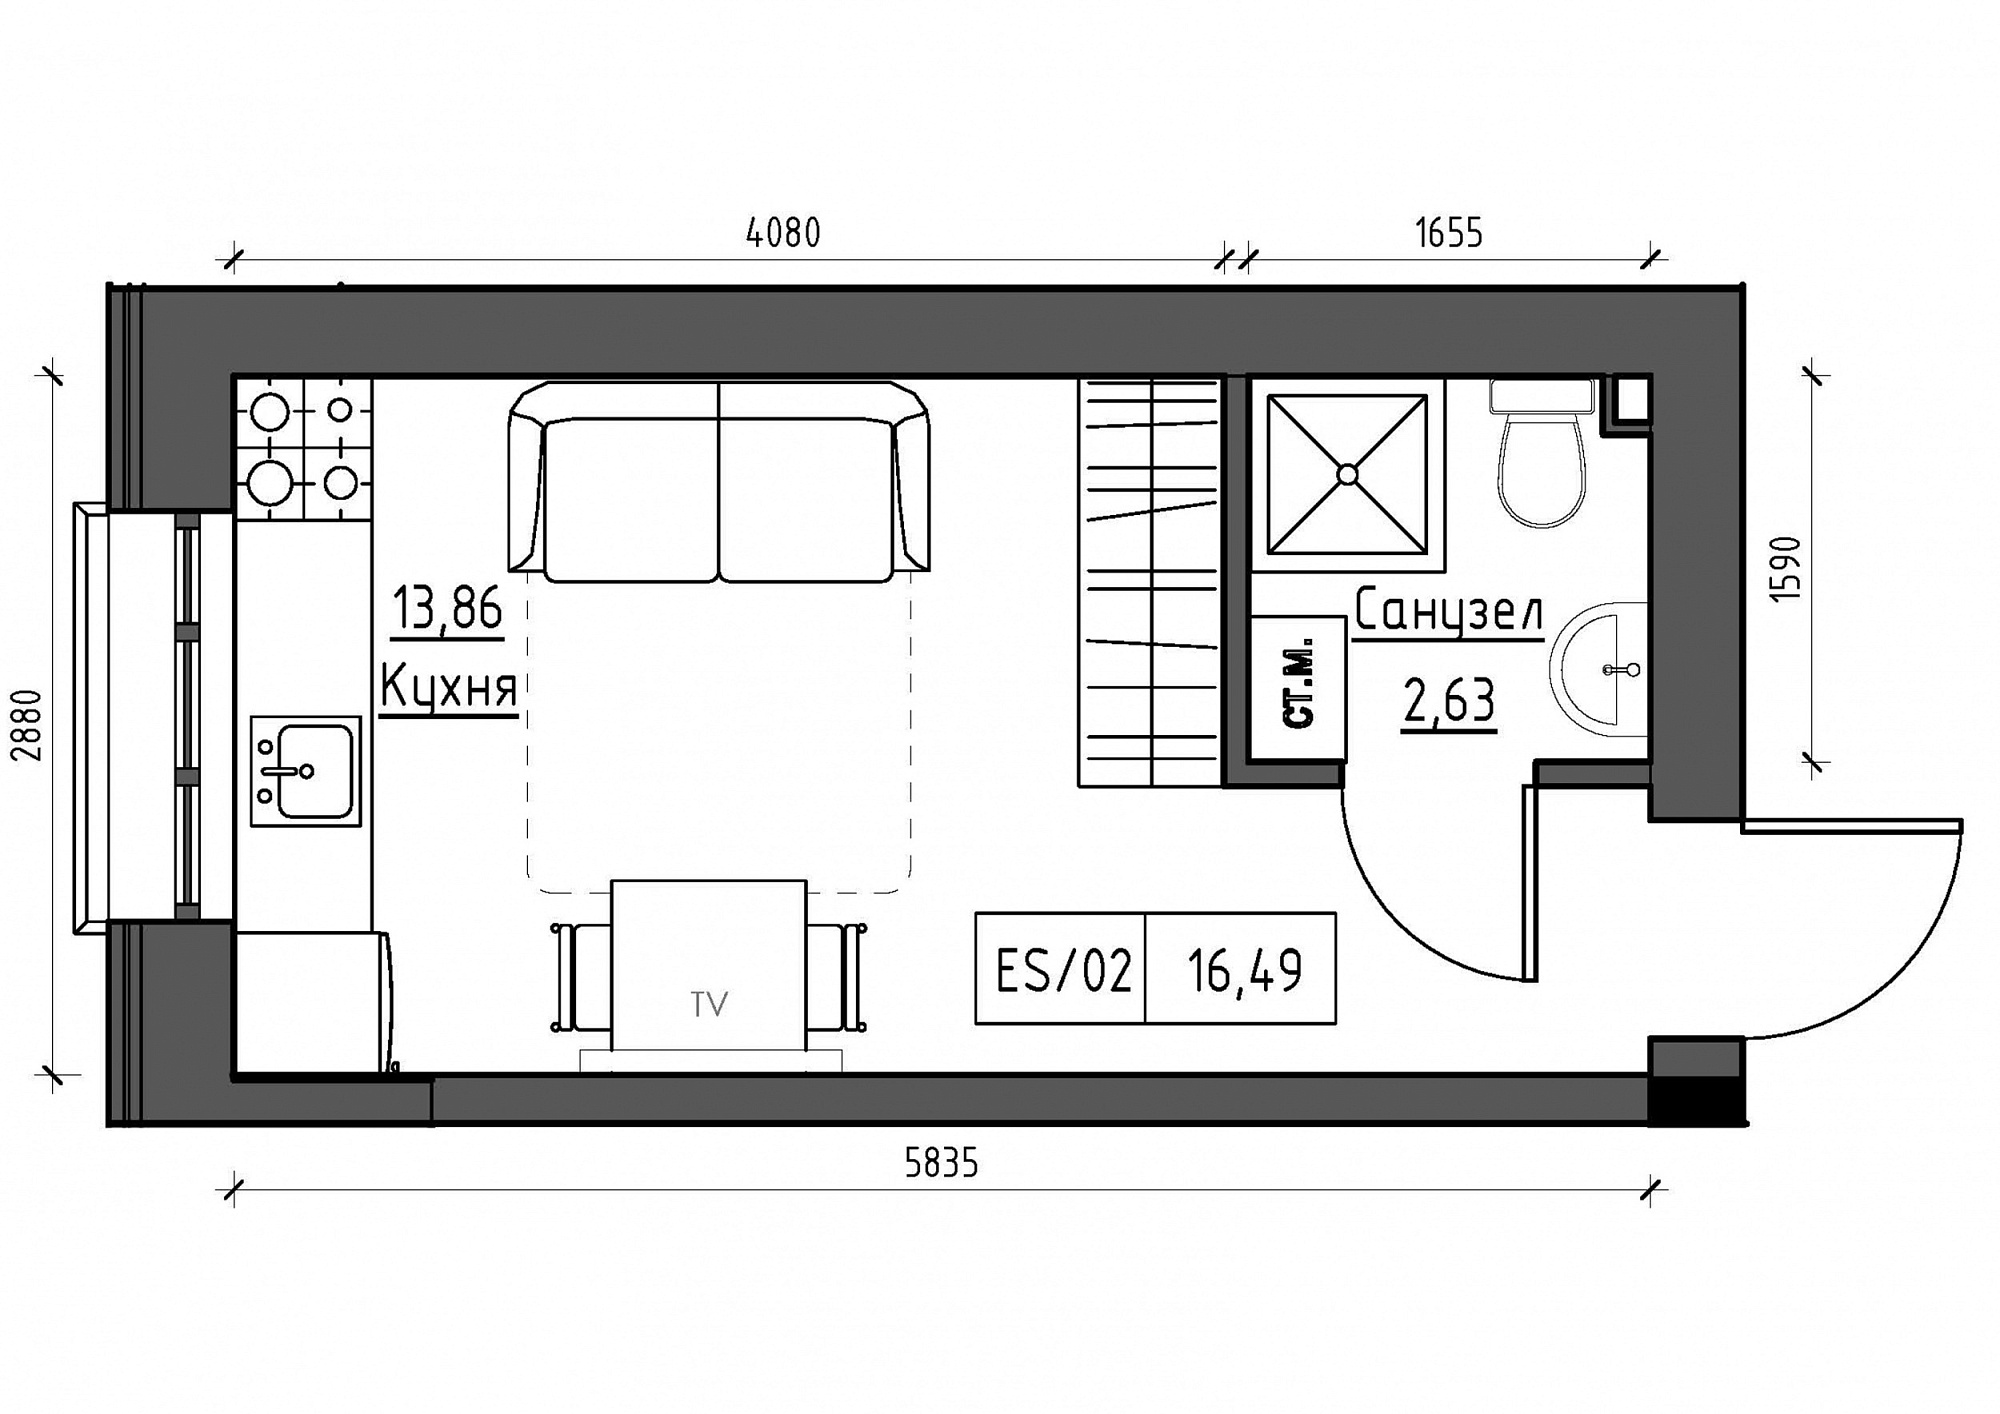 Planning Smart flats area 16.49m2, KS-012-01/0011.